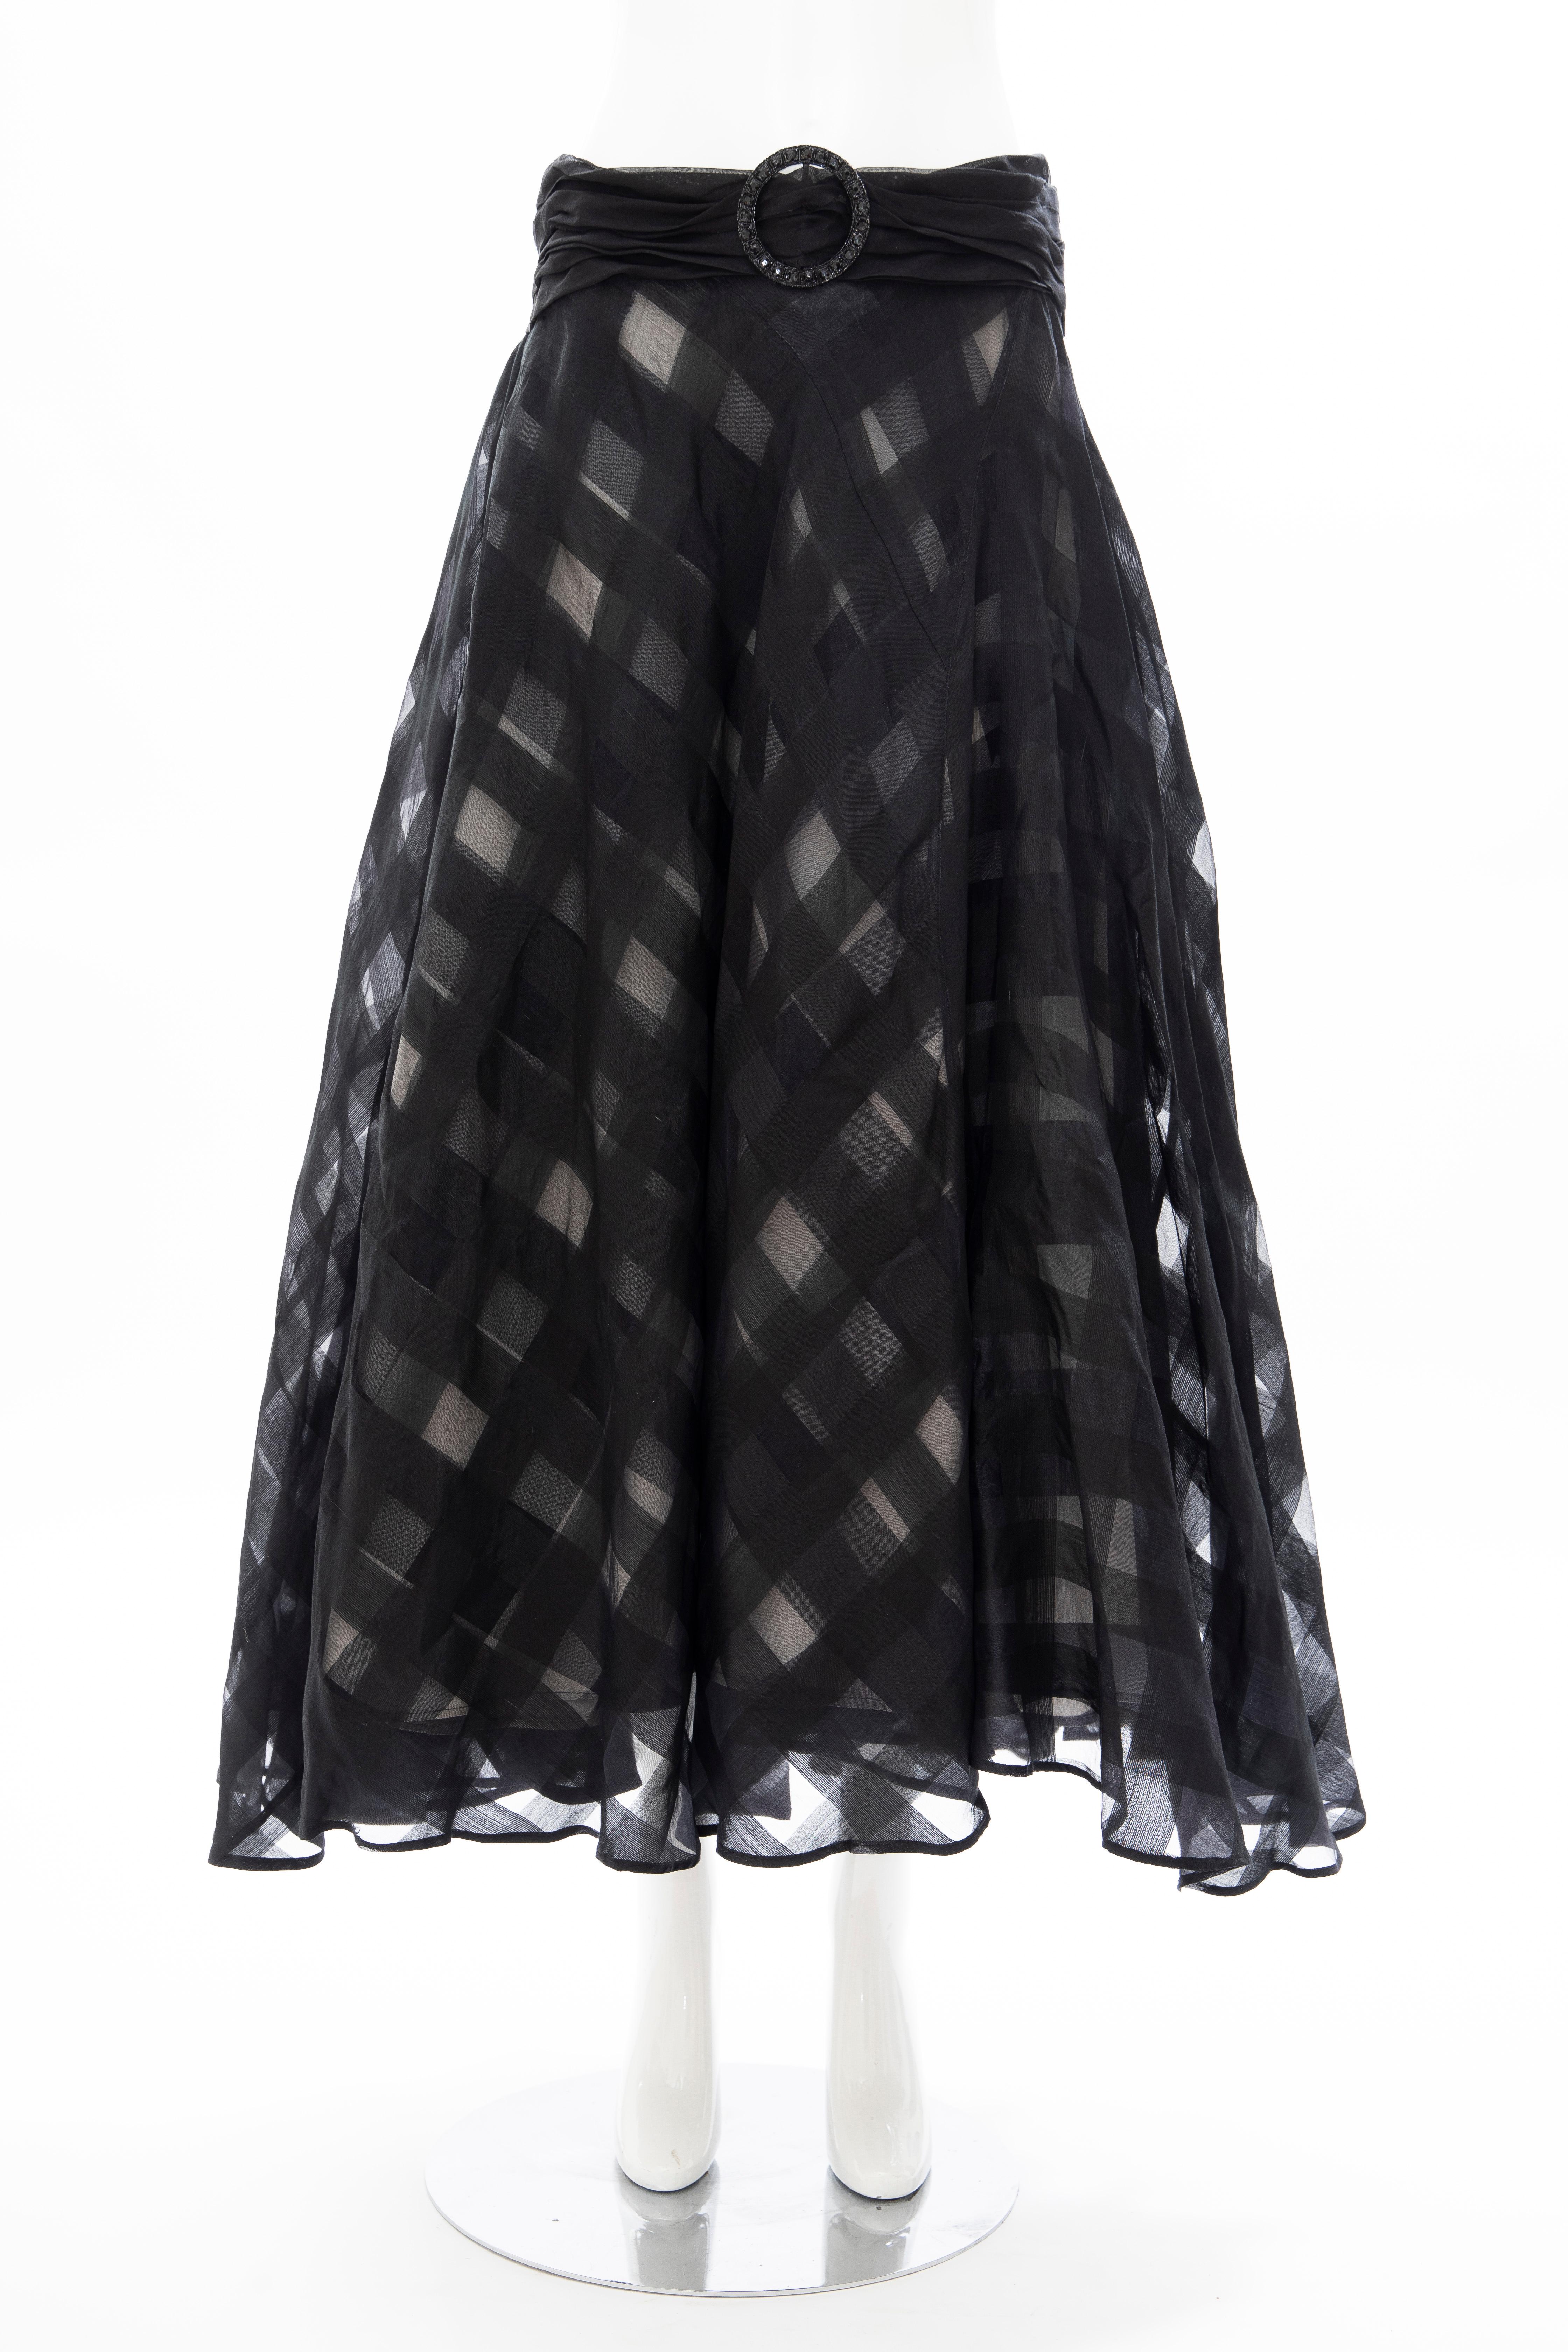 Olivier Theyskens, Runway Spring 2000, black silk checkerboard pattern circle skirt with attached black diamante buckle cummerbund, back concealed zip and hook-and-eye closure.

IT. 42, US. 6

Waist: 28